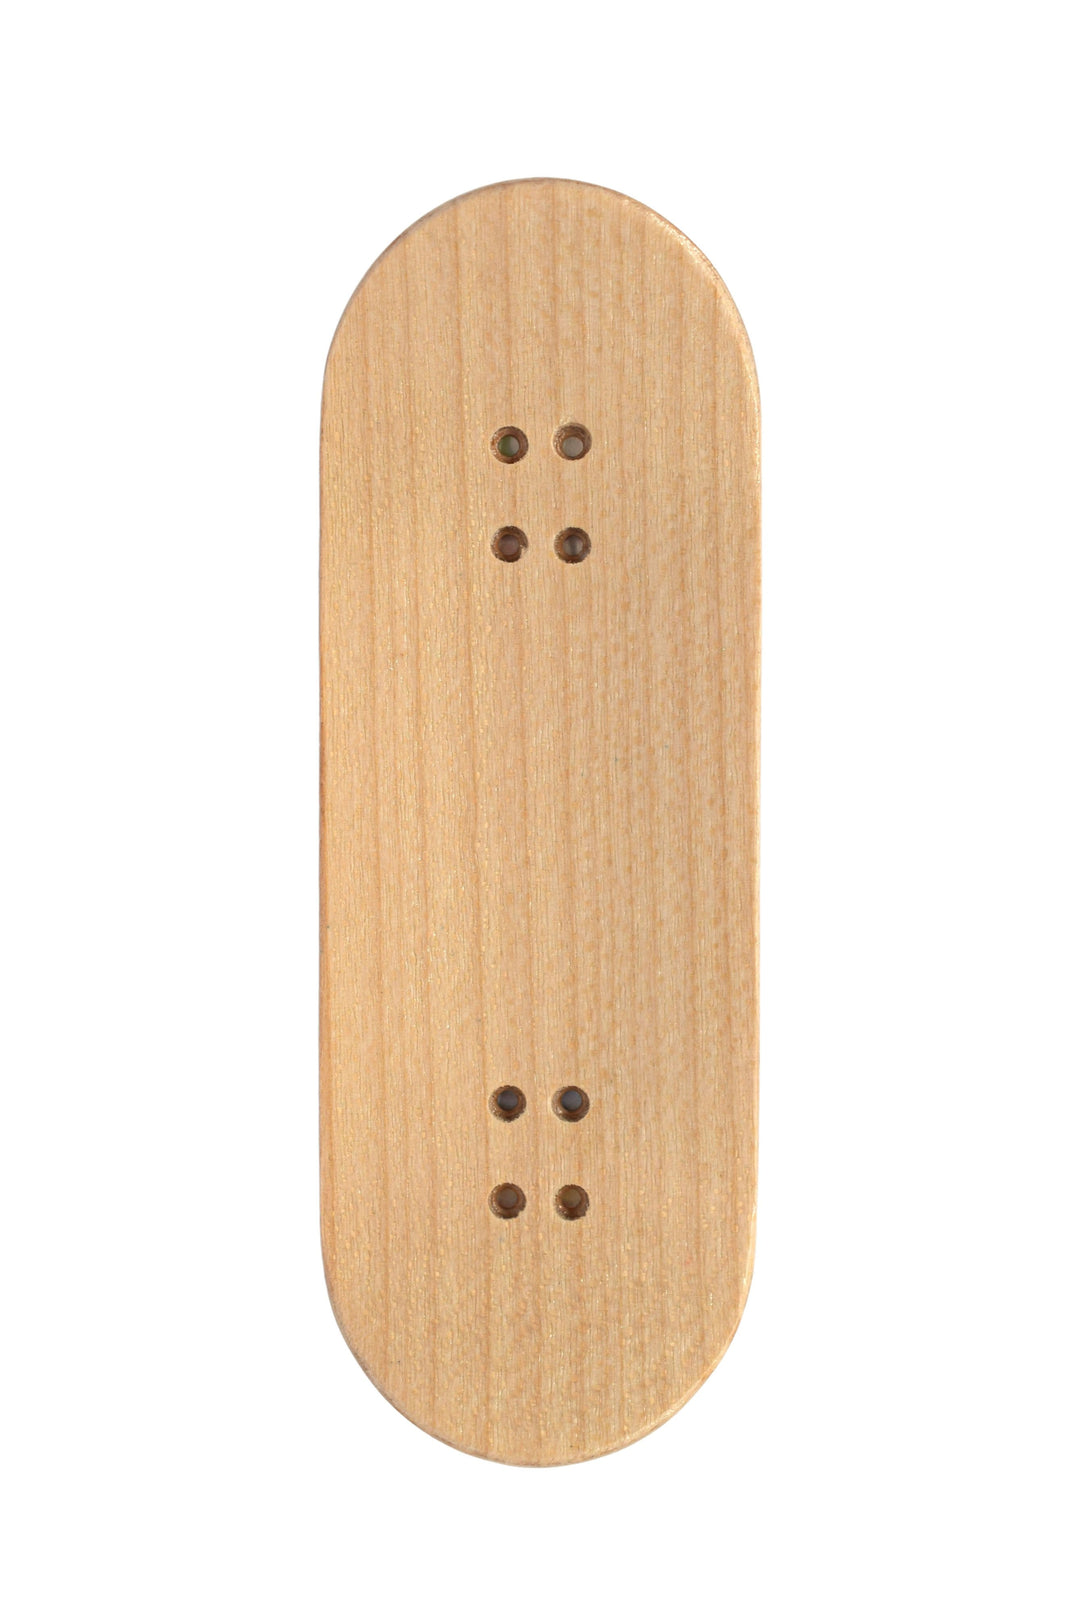 Teak Tuning Heat Transfer Graphic Wooden Fingerboard Deck, "Teal Yeti" - 32mm x 97mm